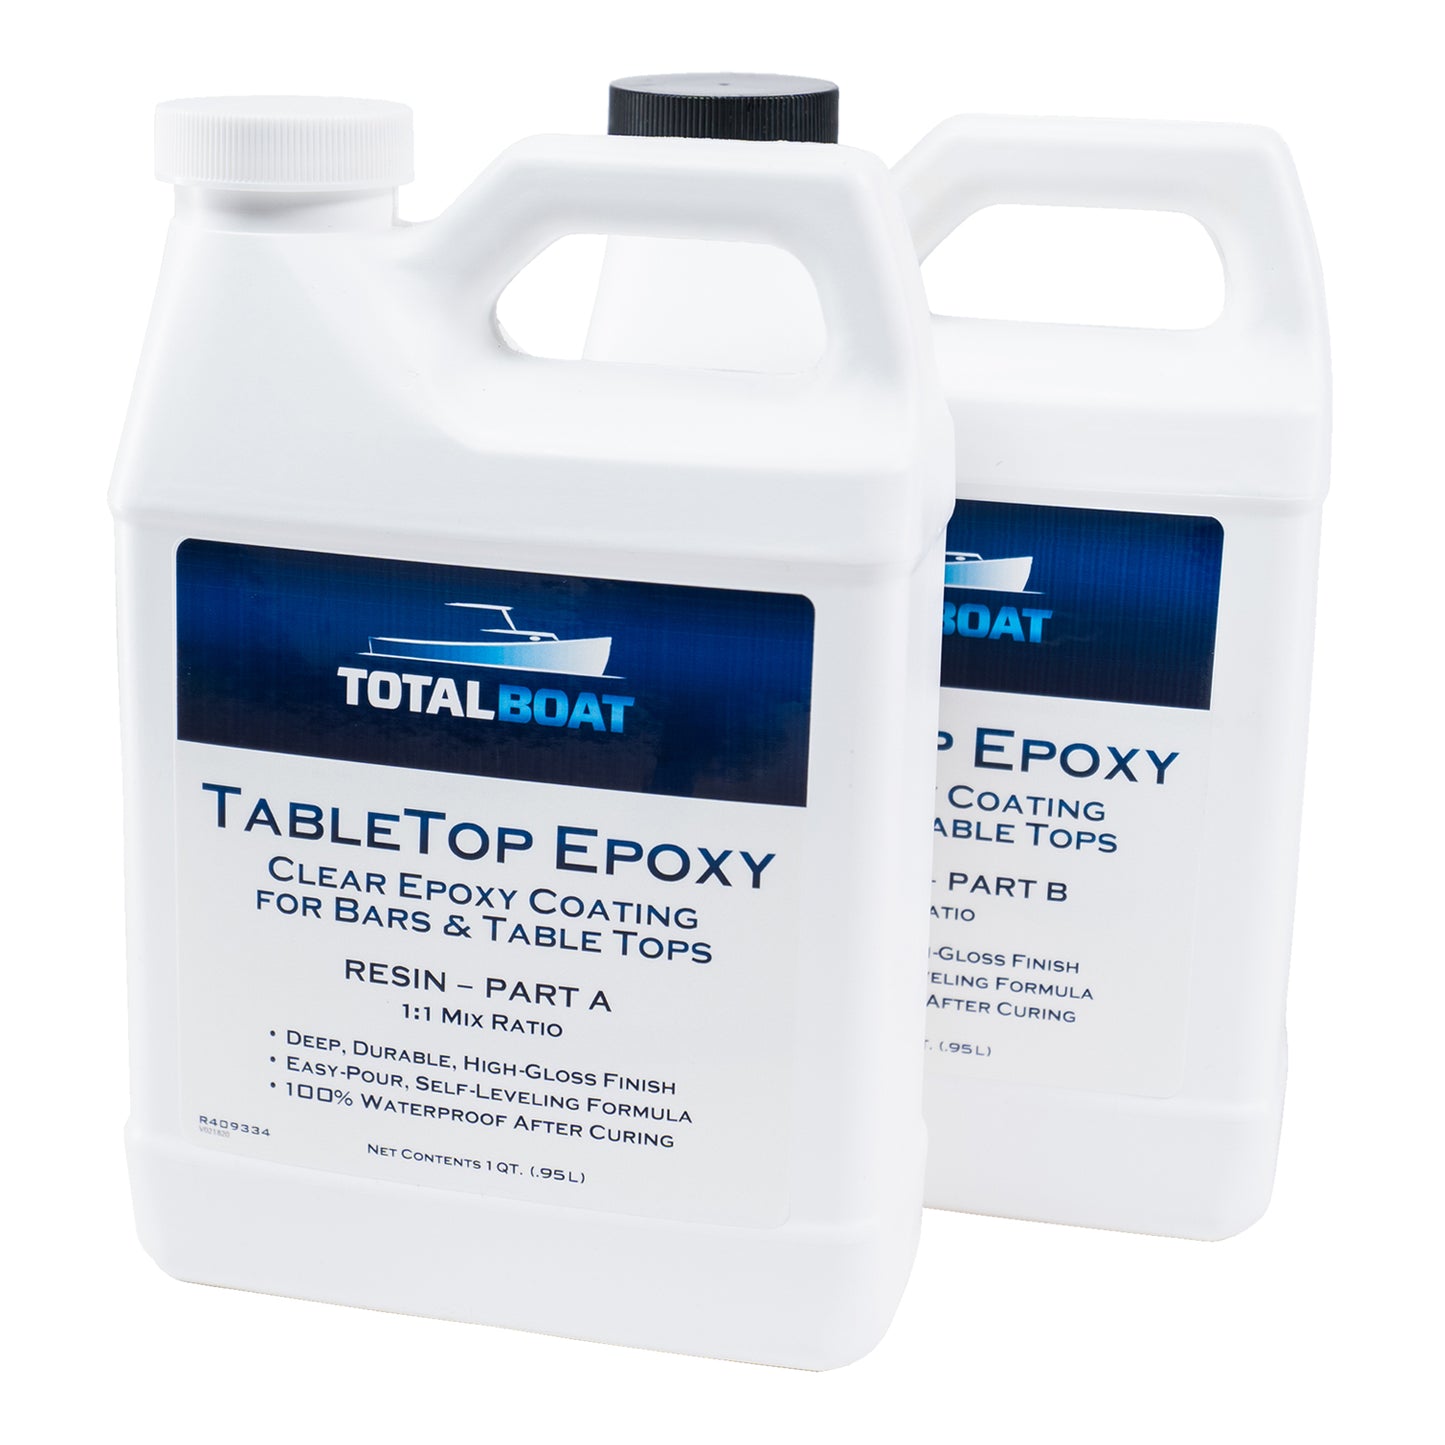 STONE COAT COUNTERTOPS  Epoxy Design Group Inc. - Epoxy Tables